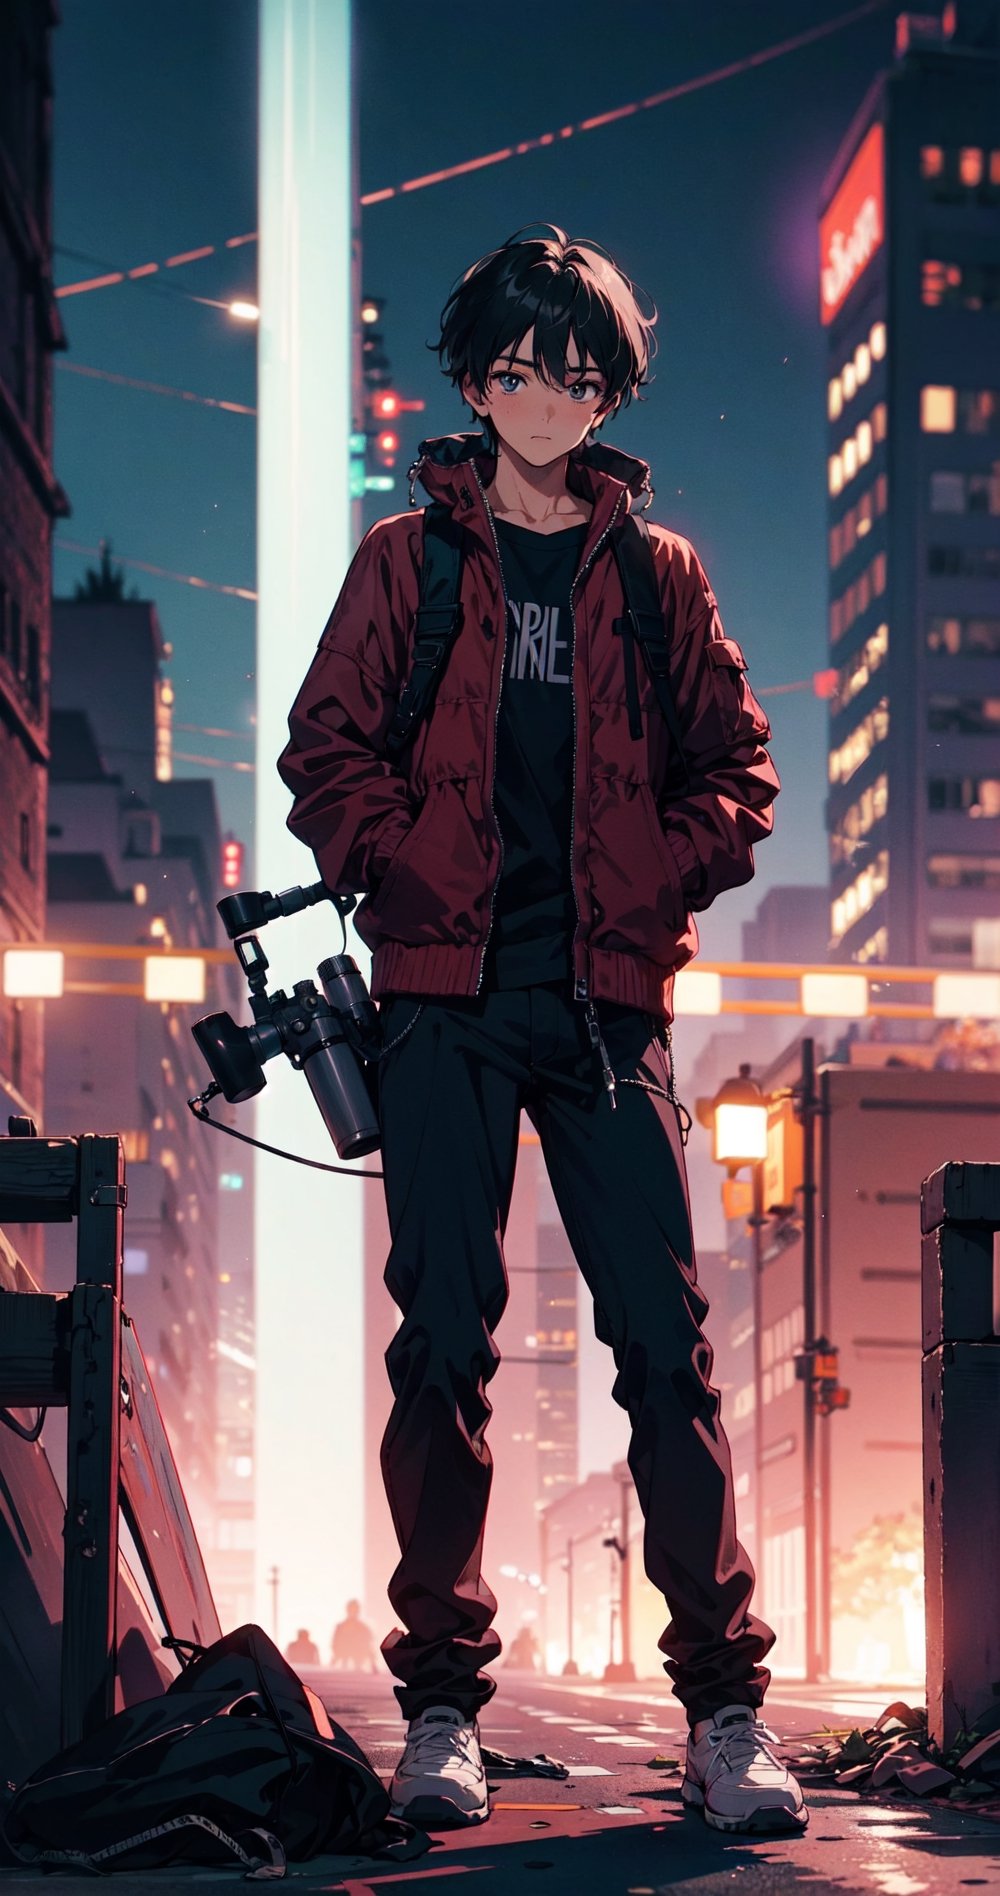 1boy with telescope, fujifilm camera, night city,epic photo